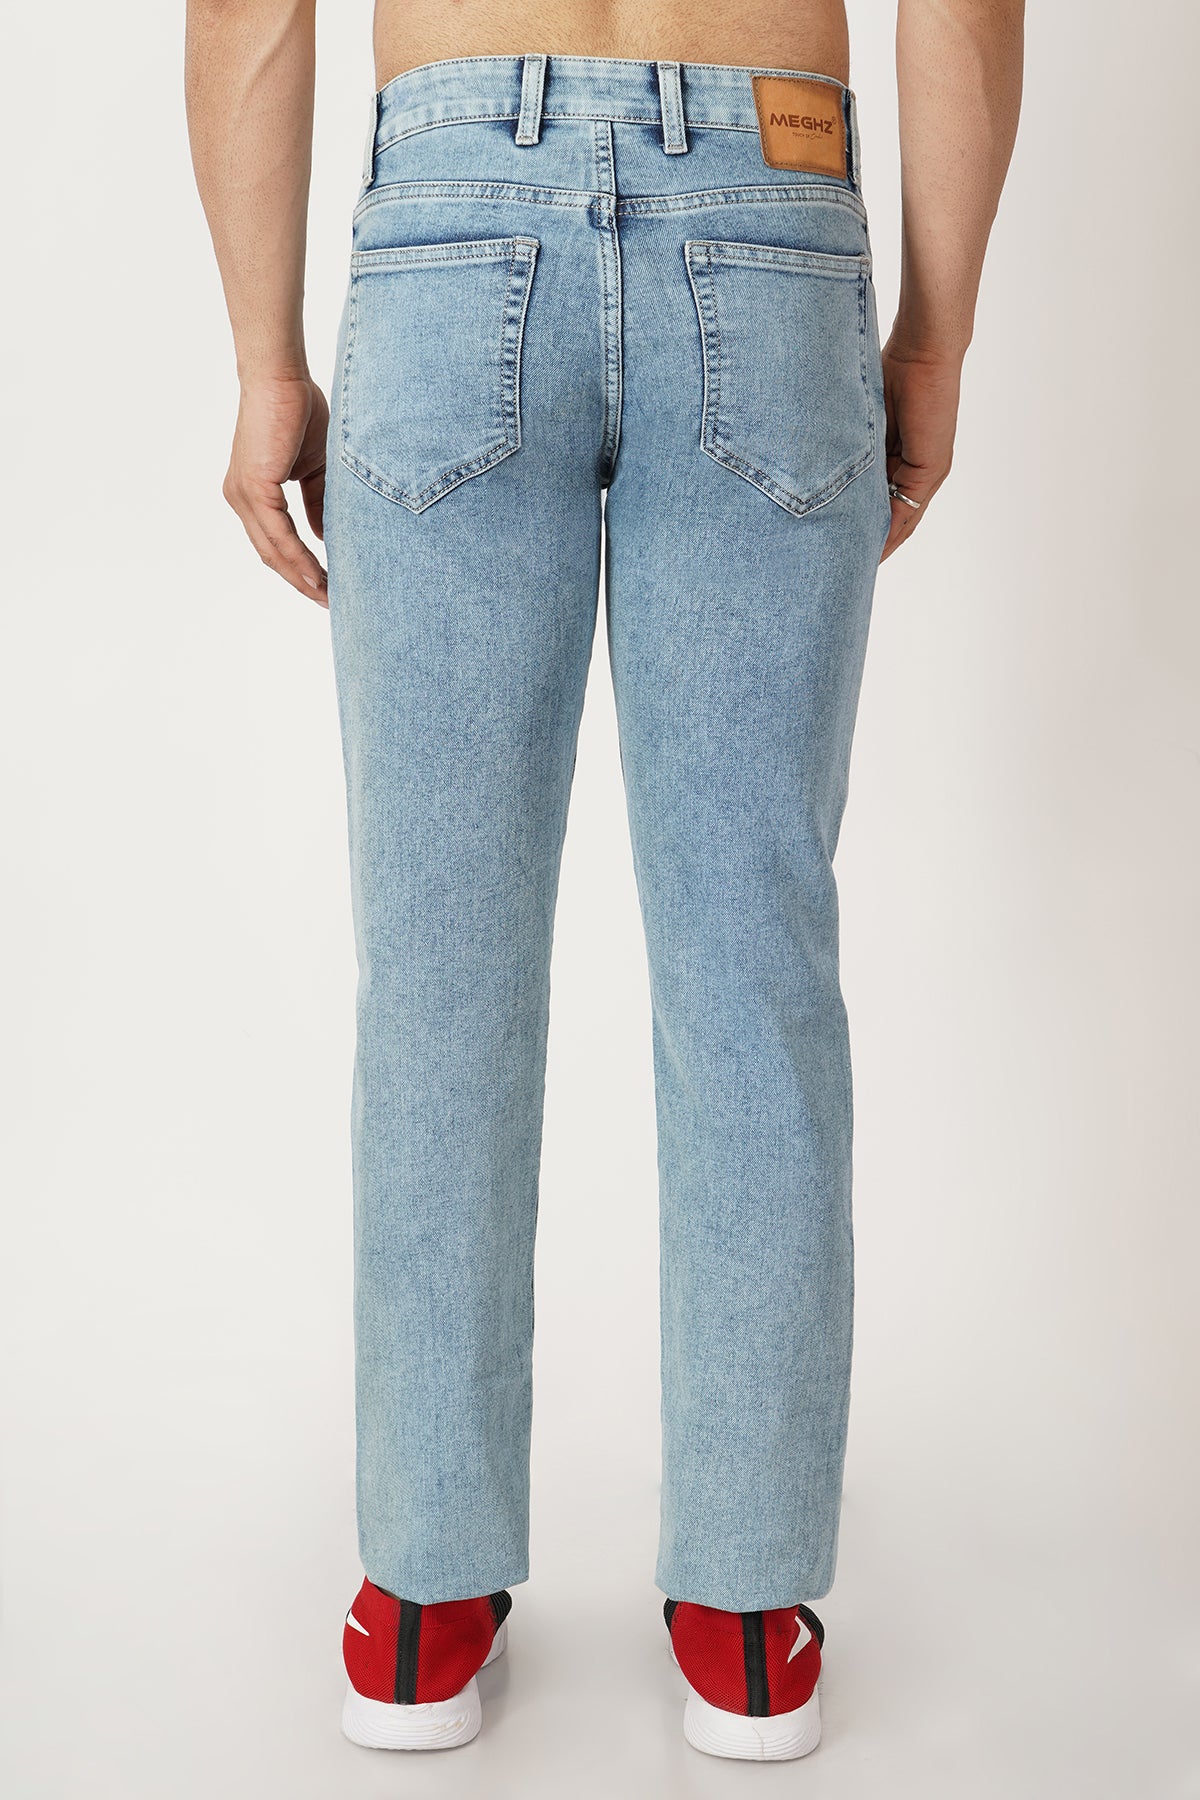 Men's Slim Fit Vintage Blue Jeans